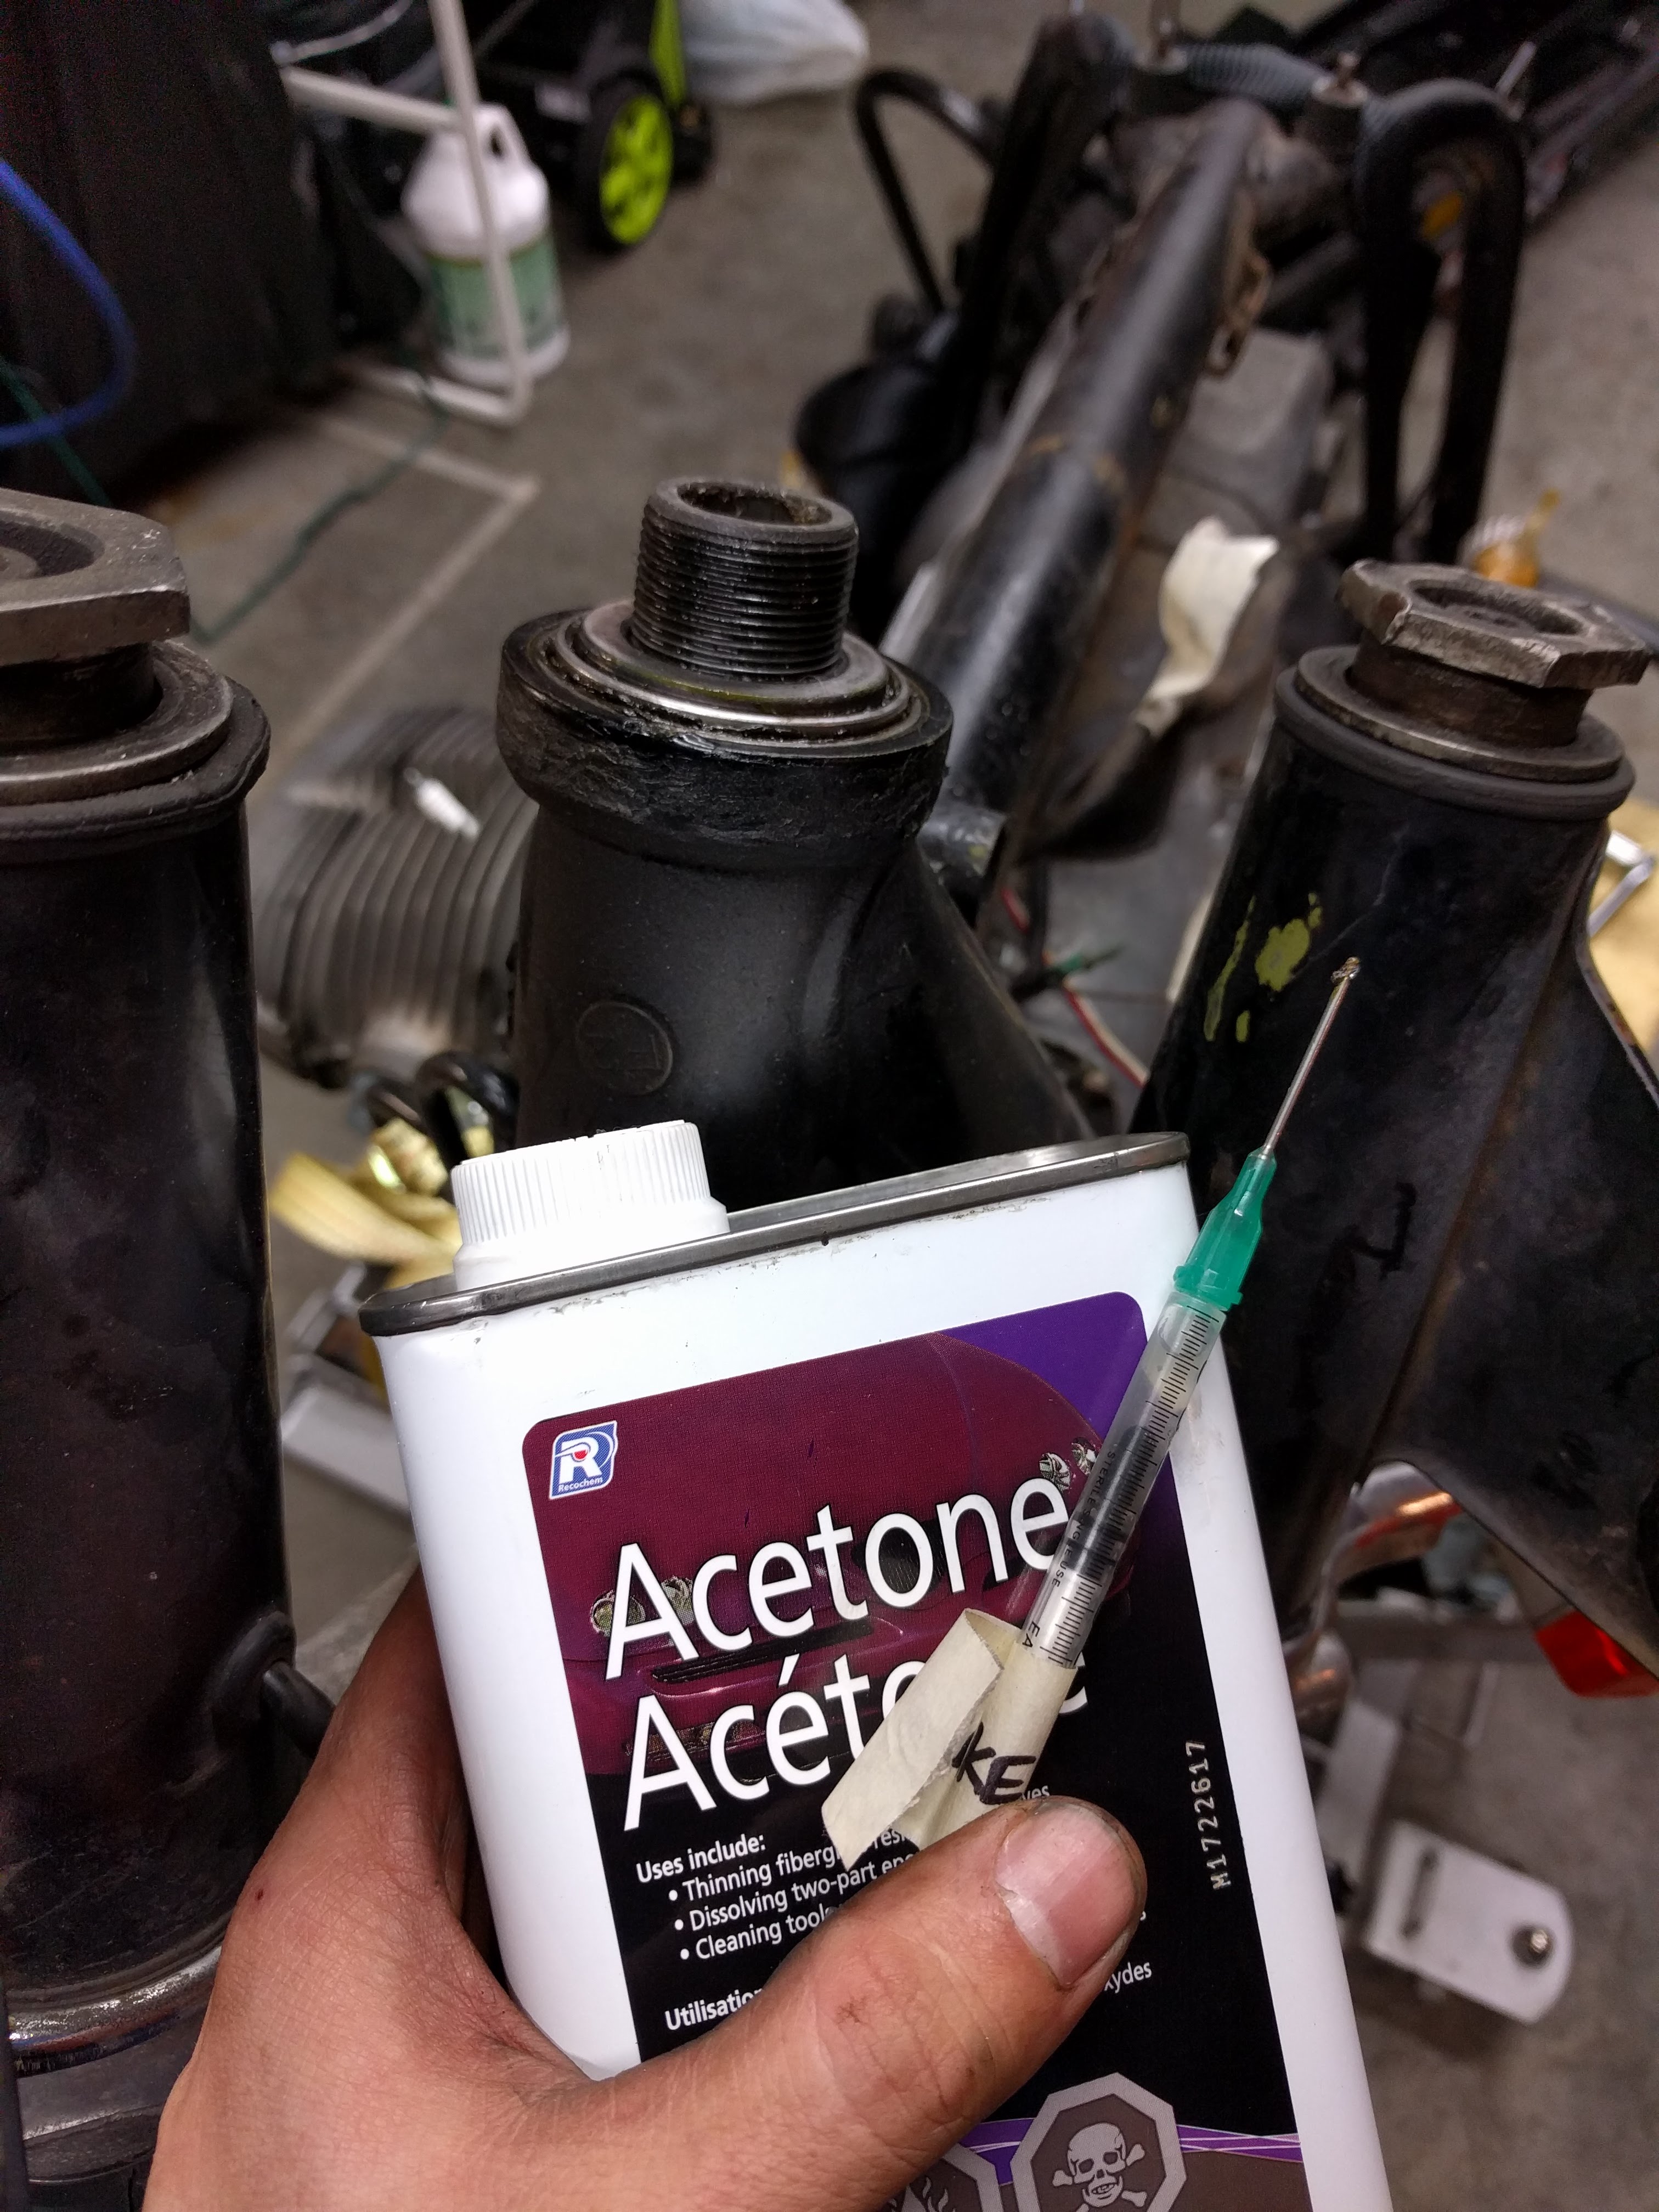 R80 03 Acetone…more like awesometone